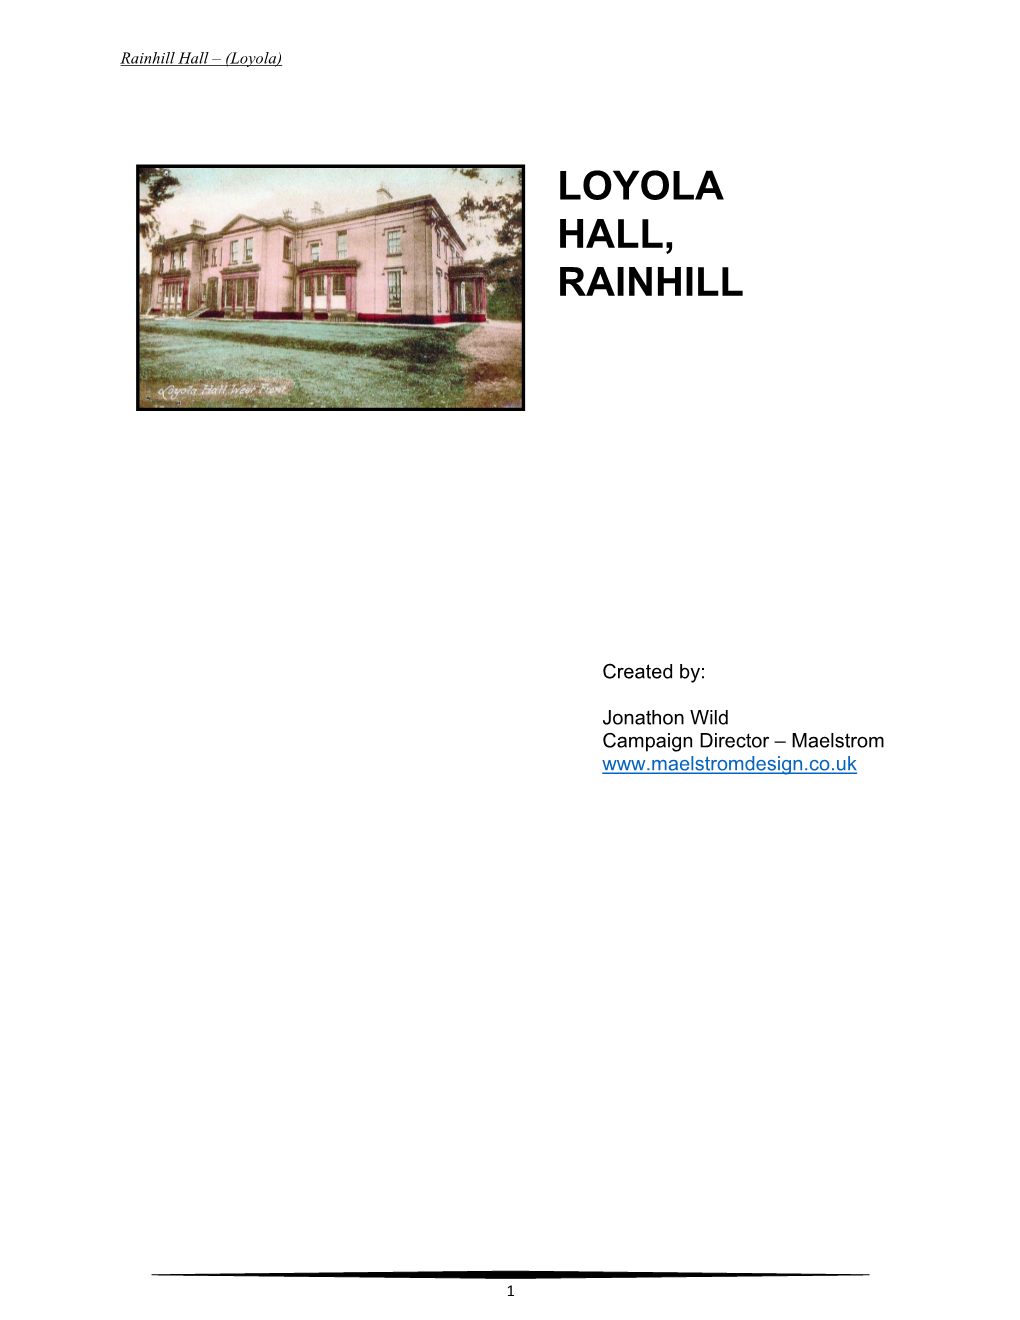 Loyola Hall, Rainhill